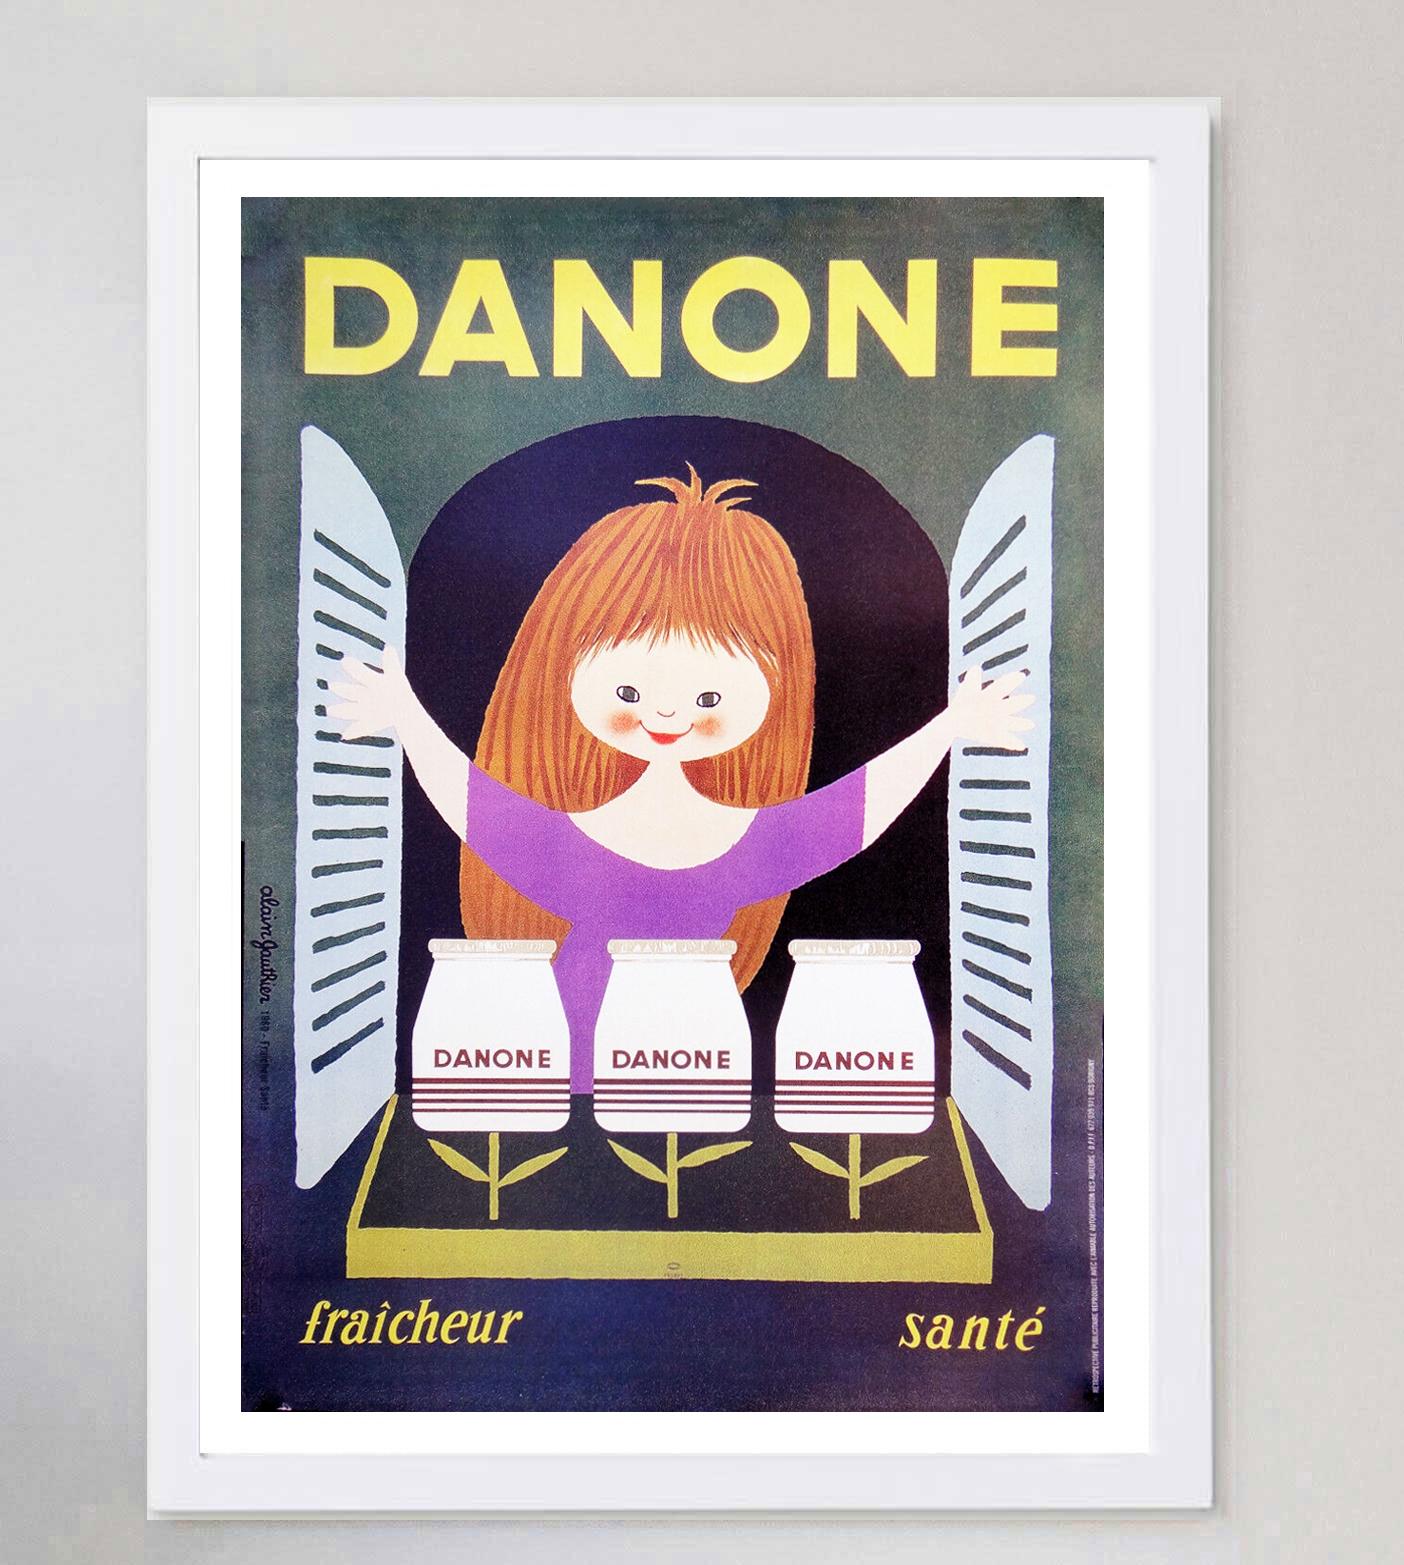 Beautiful mid century design for Danone reading 